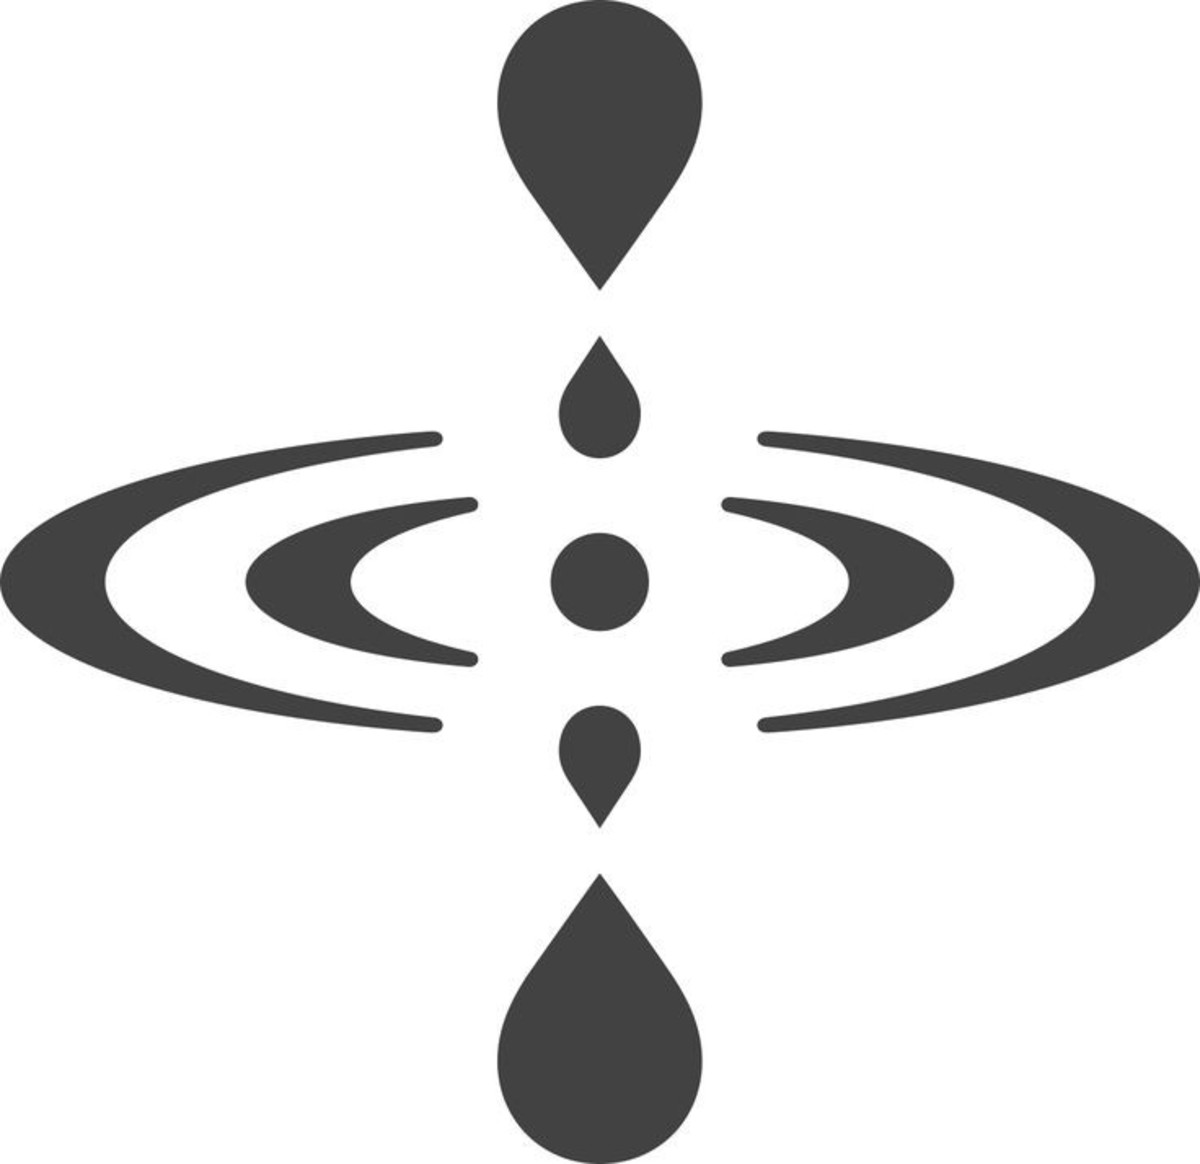 the-mindfulness-symbol